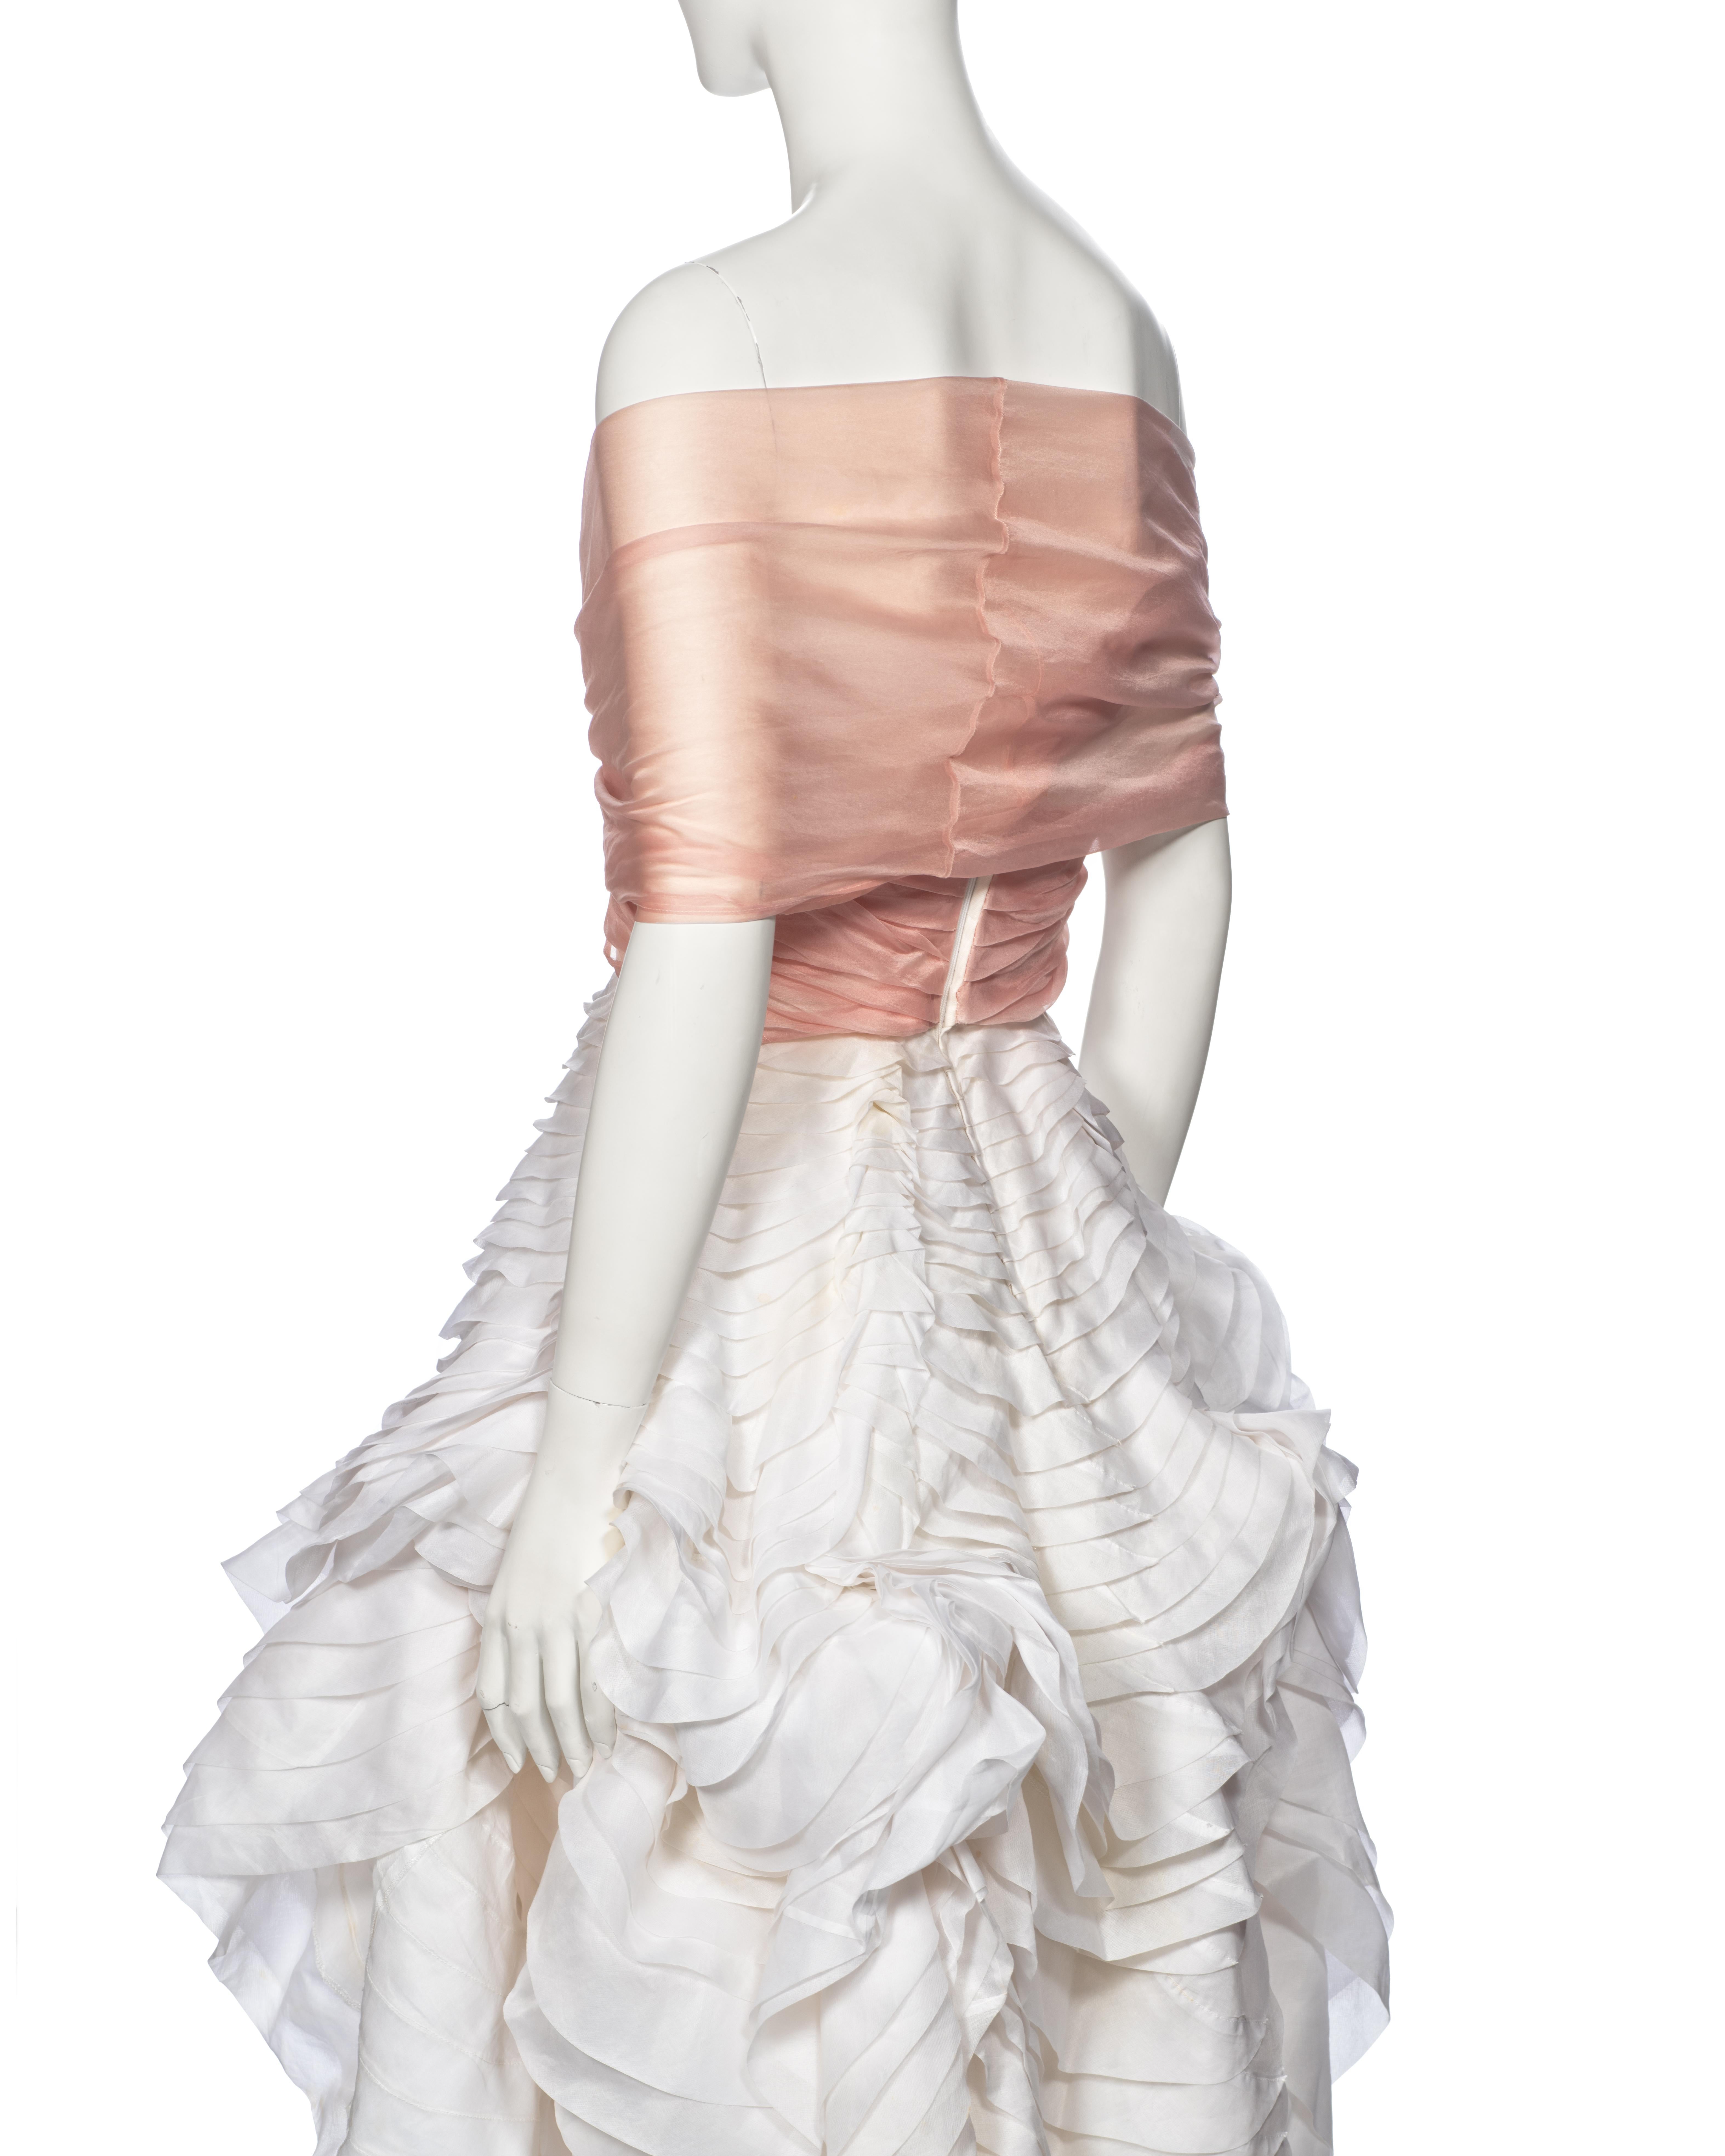 John Galliano Blanche DuBois Clam Dress, ss 1988 For Sale 6